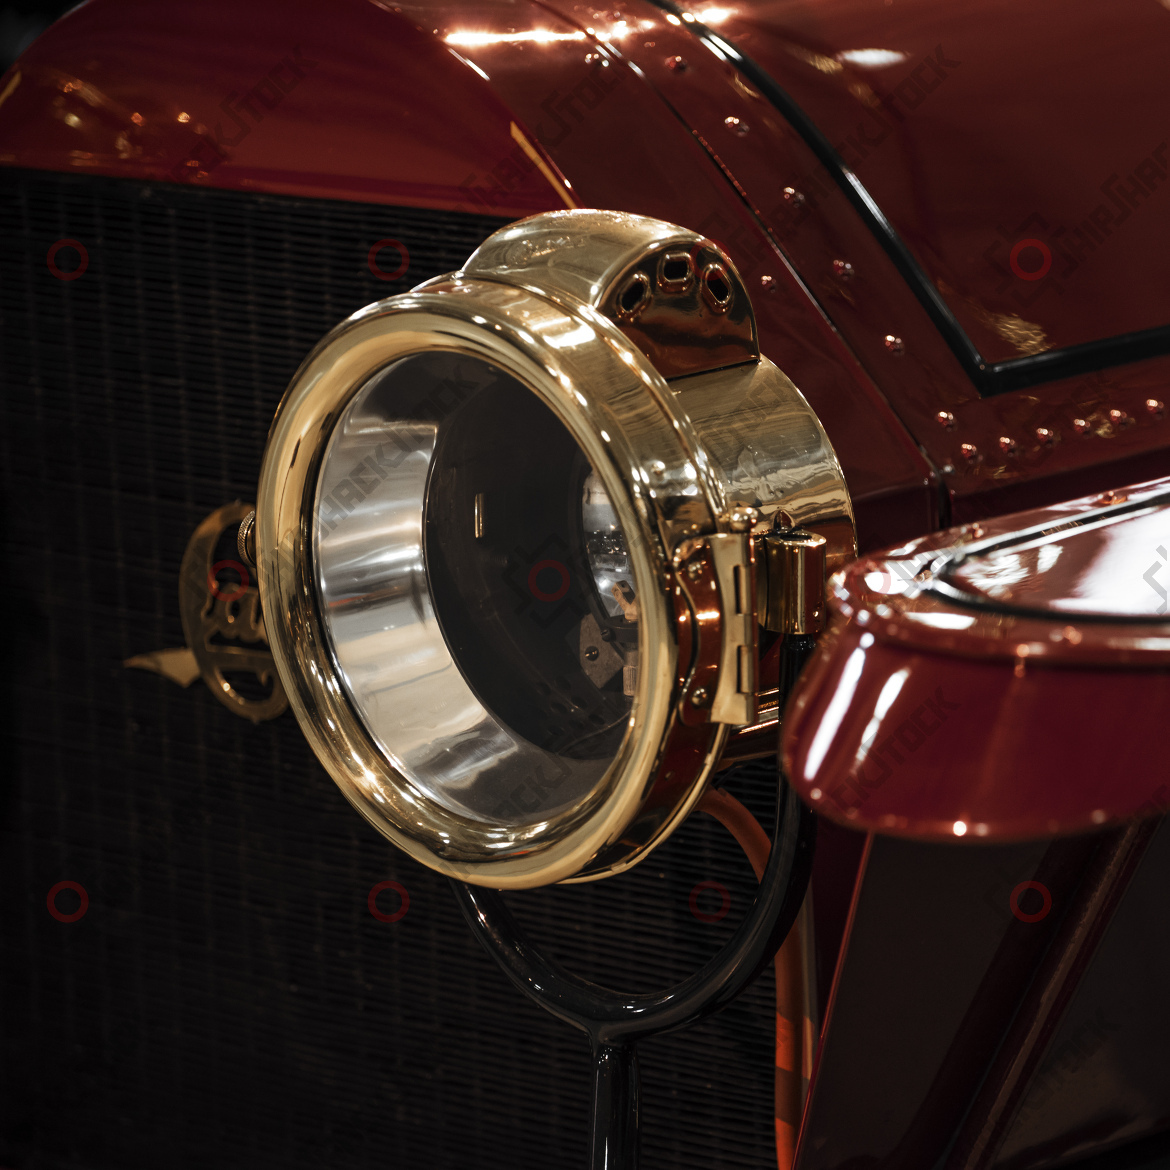 1911 Cadillac